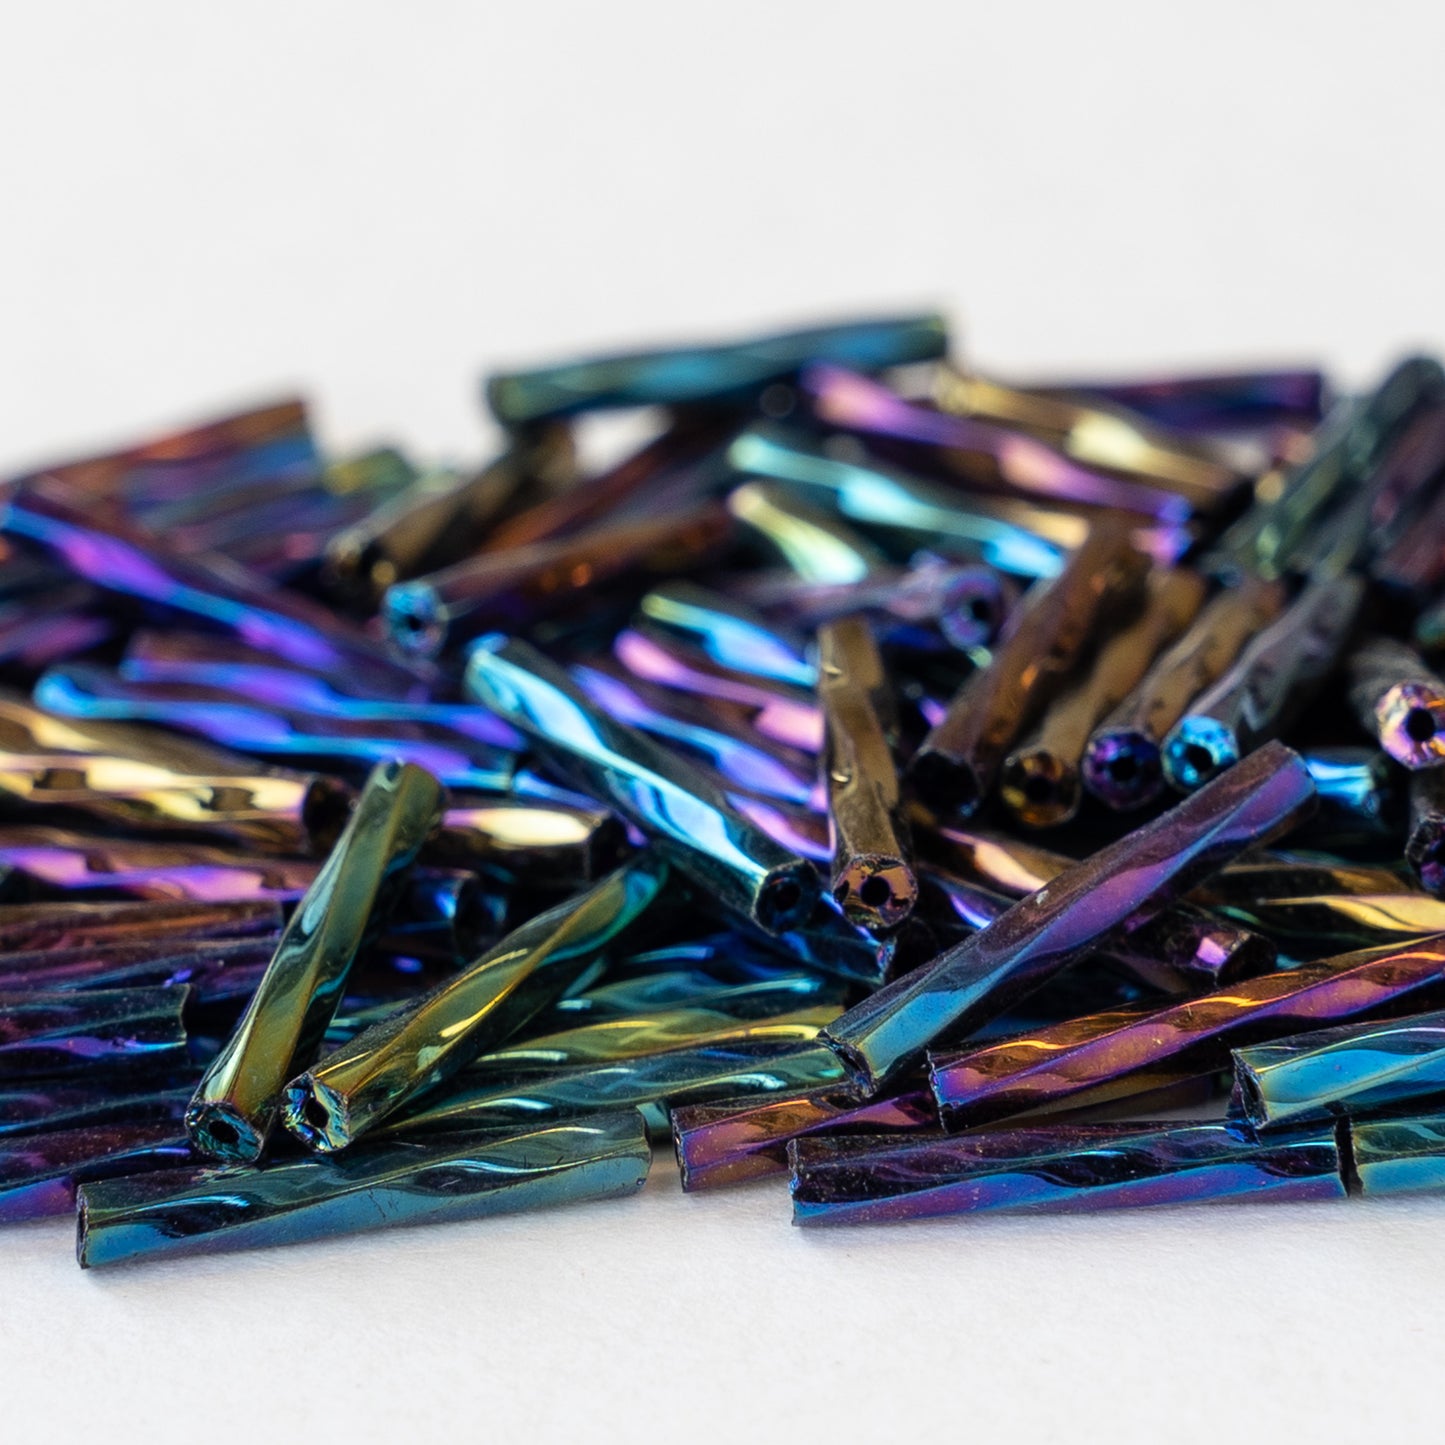 6 mm Bugle Beads Blue Iris (HEX) – www.